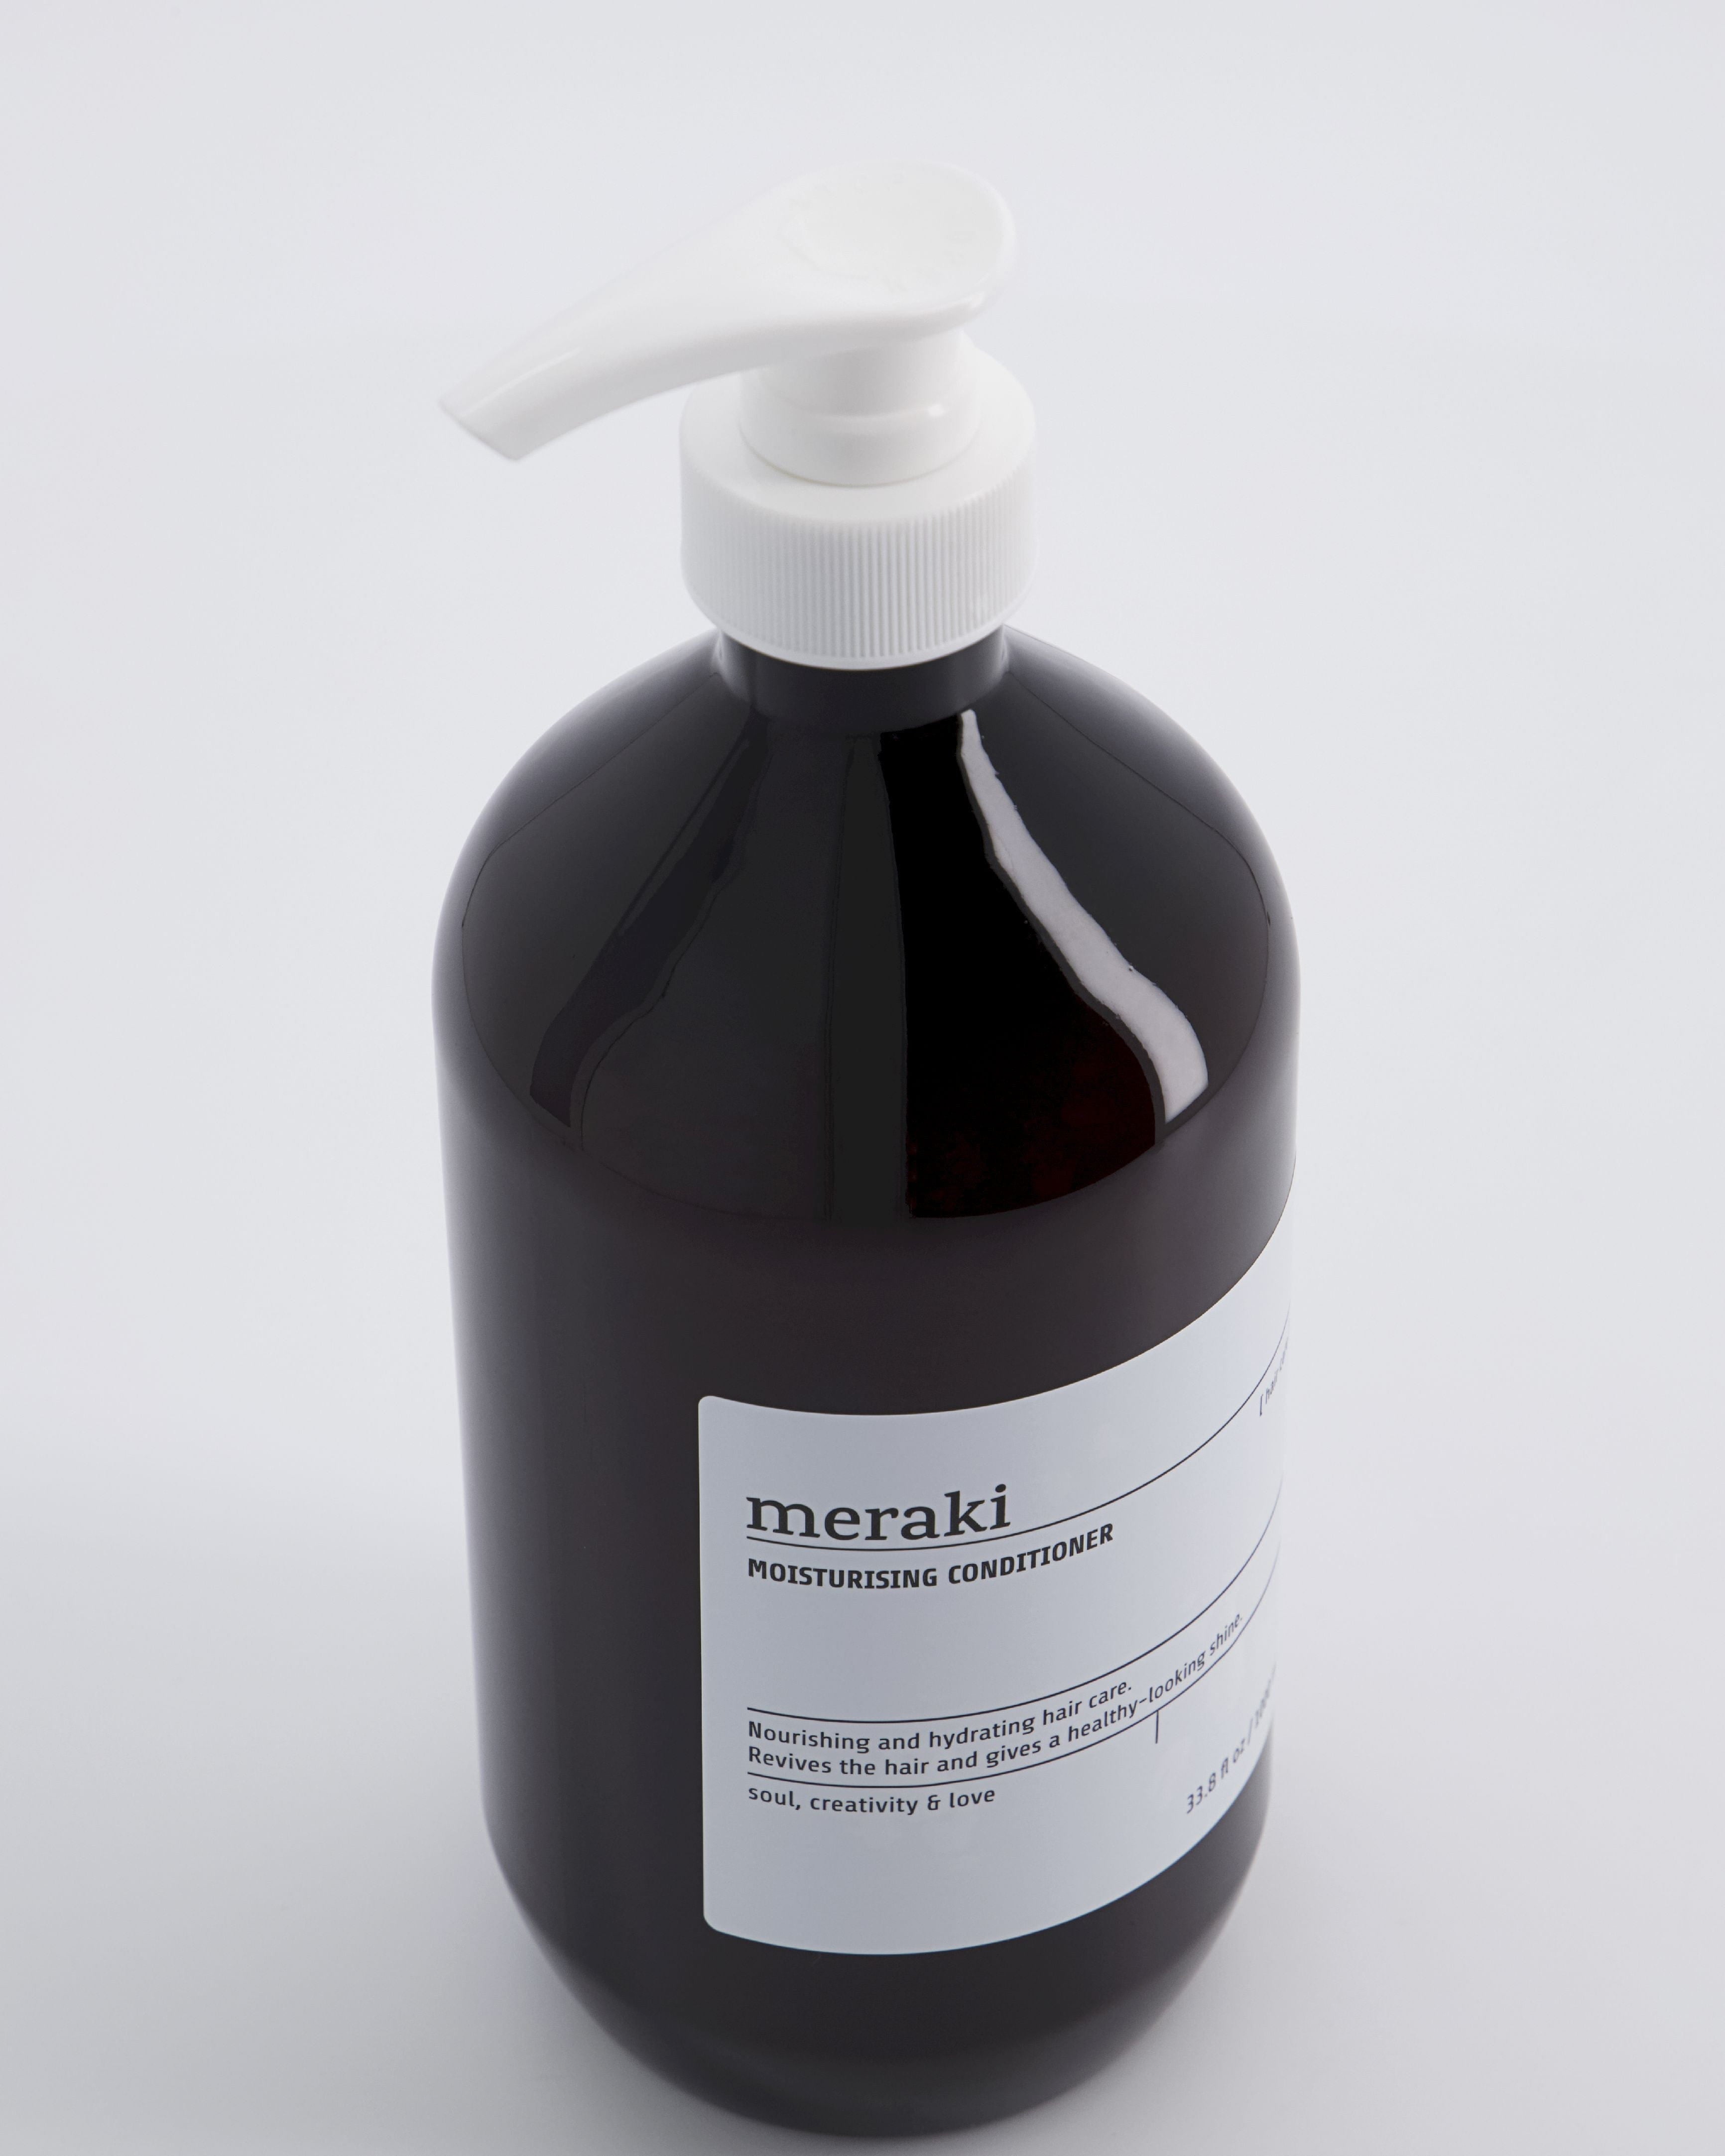 Acondicionador hidratante de Meraki 1 L